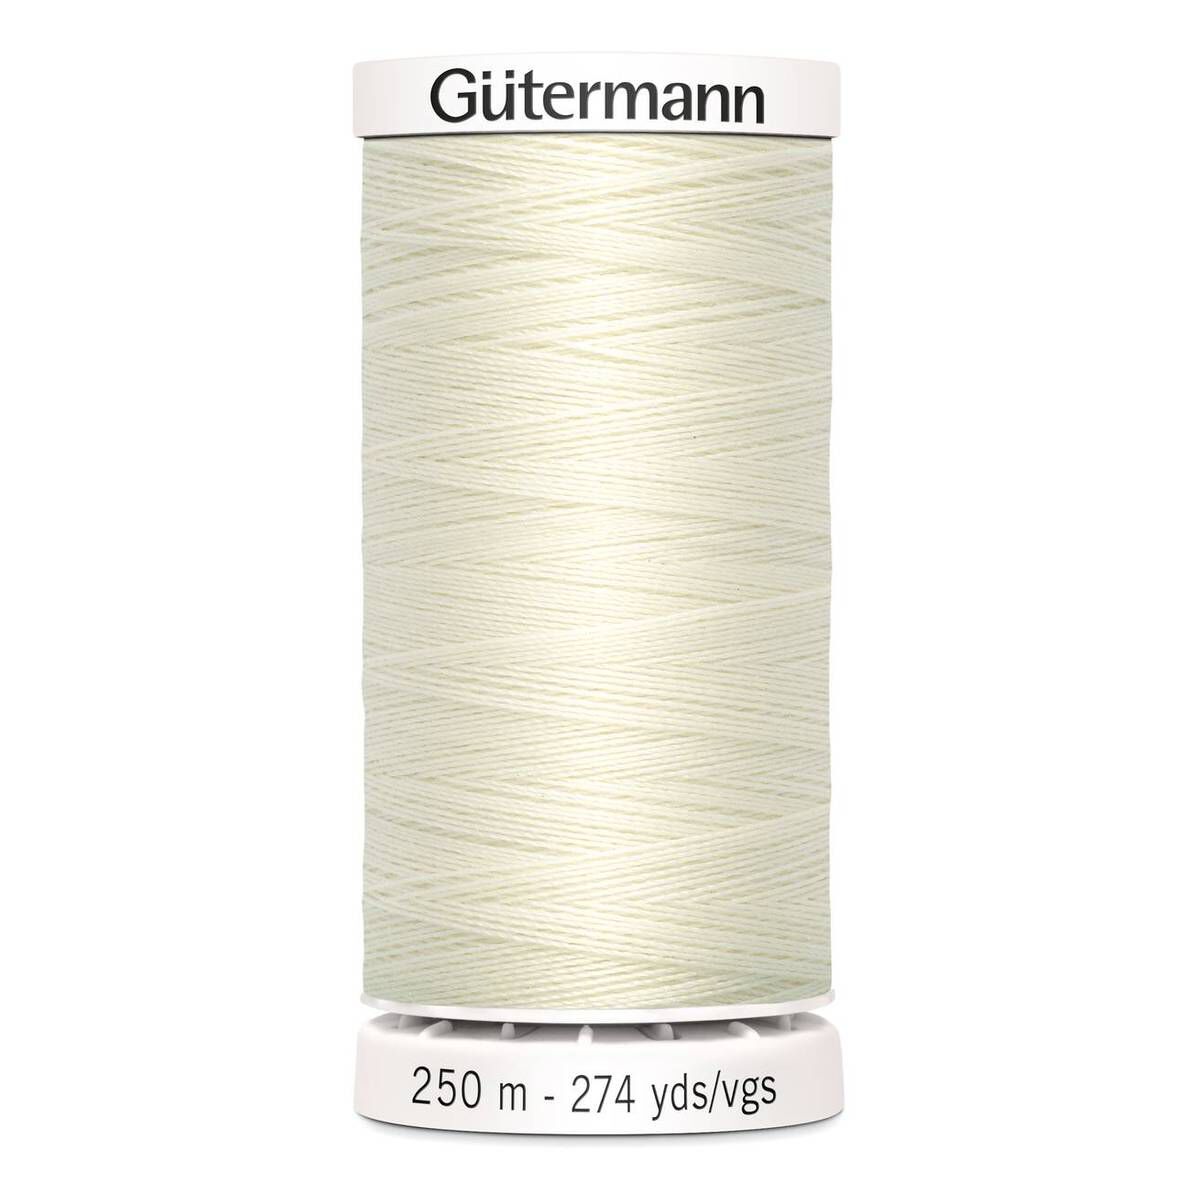 Gutermann White Sew All Thread 250m (1) | Hobbycraft